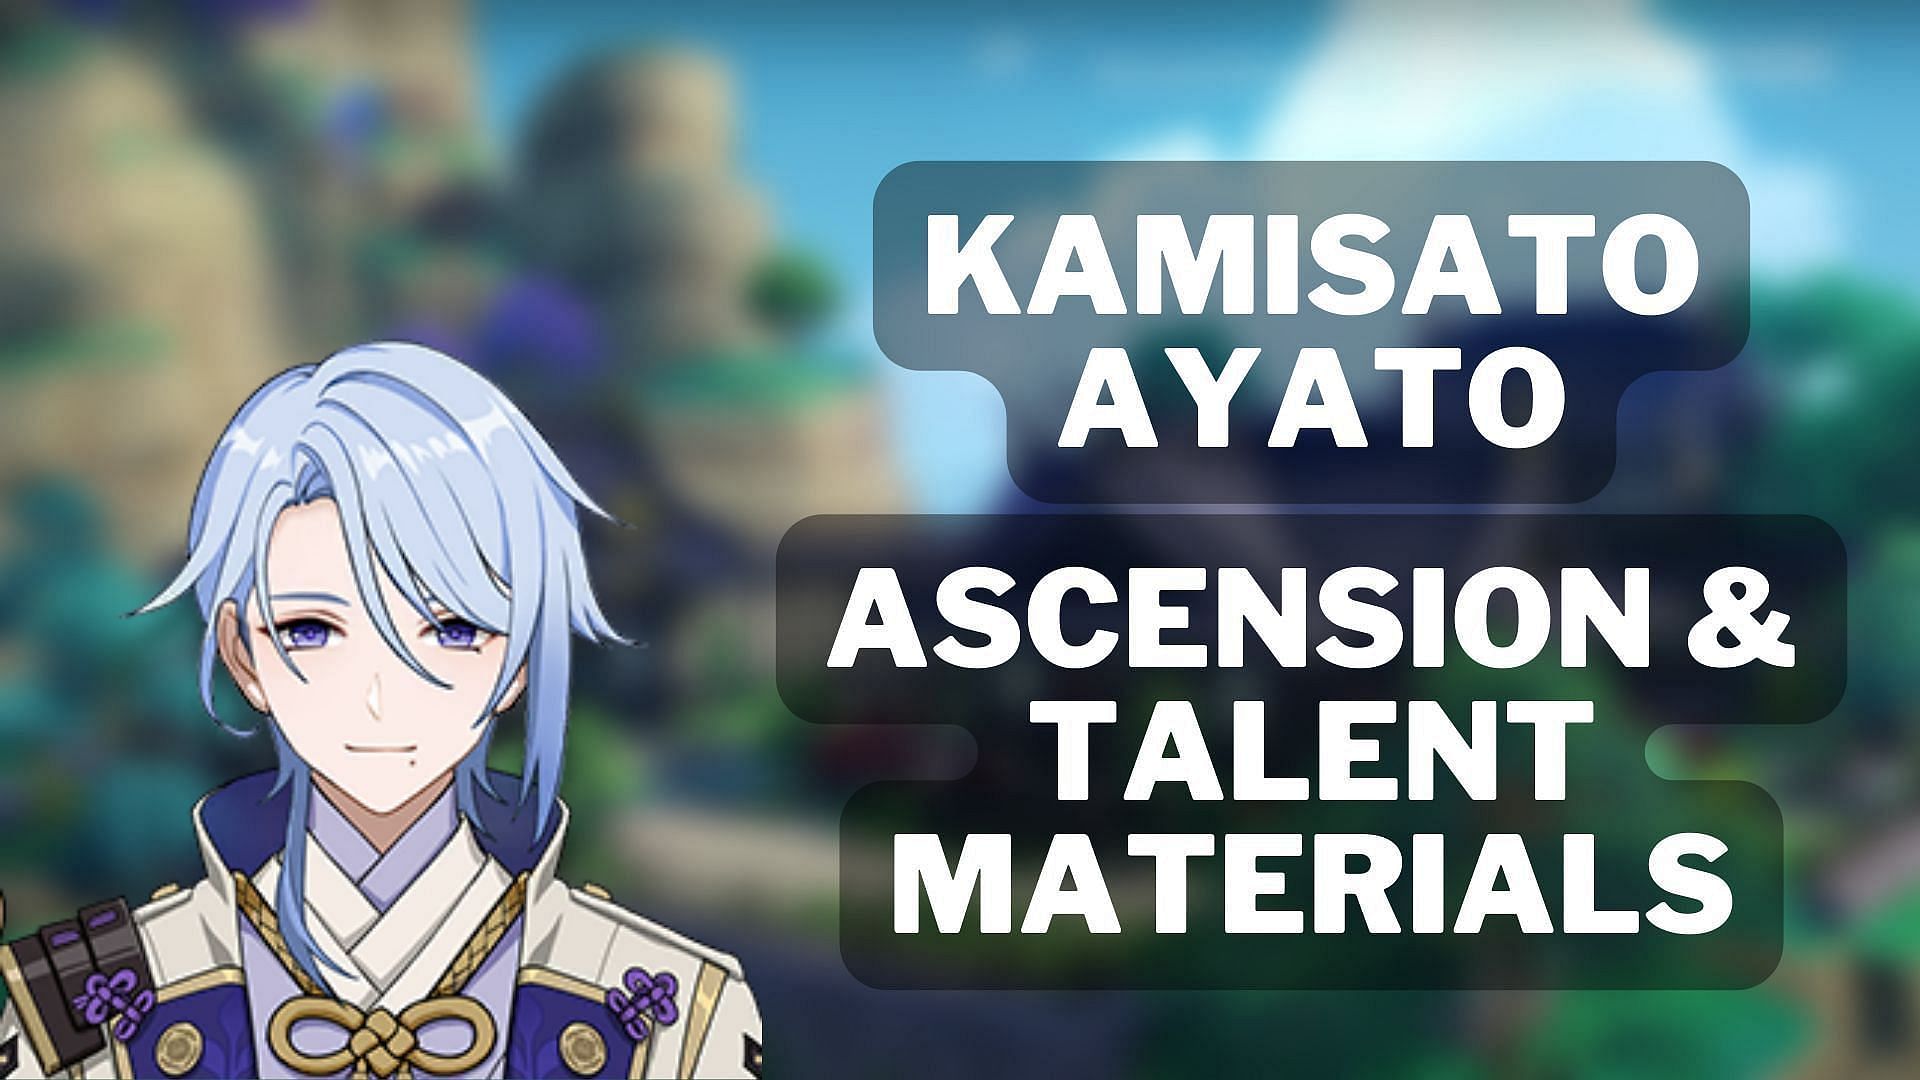 Materials kamisato ayato ascension Genshin Impact: